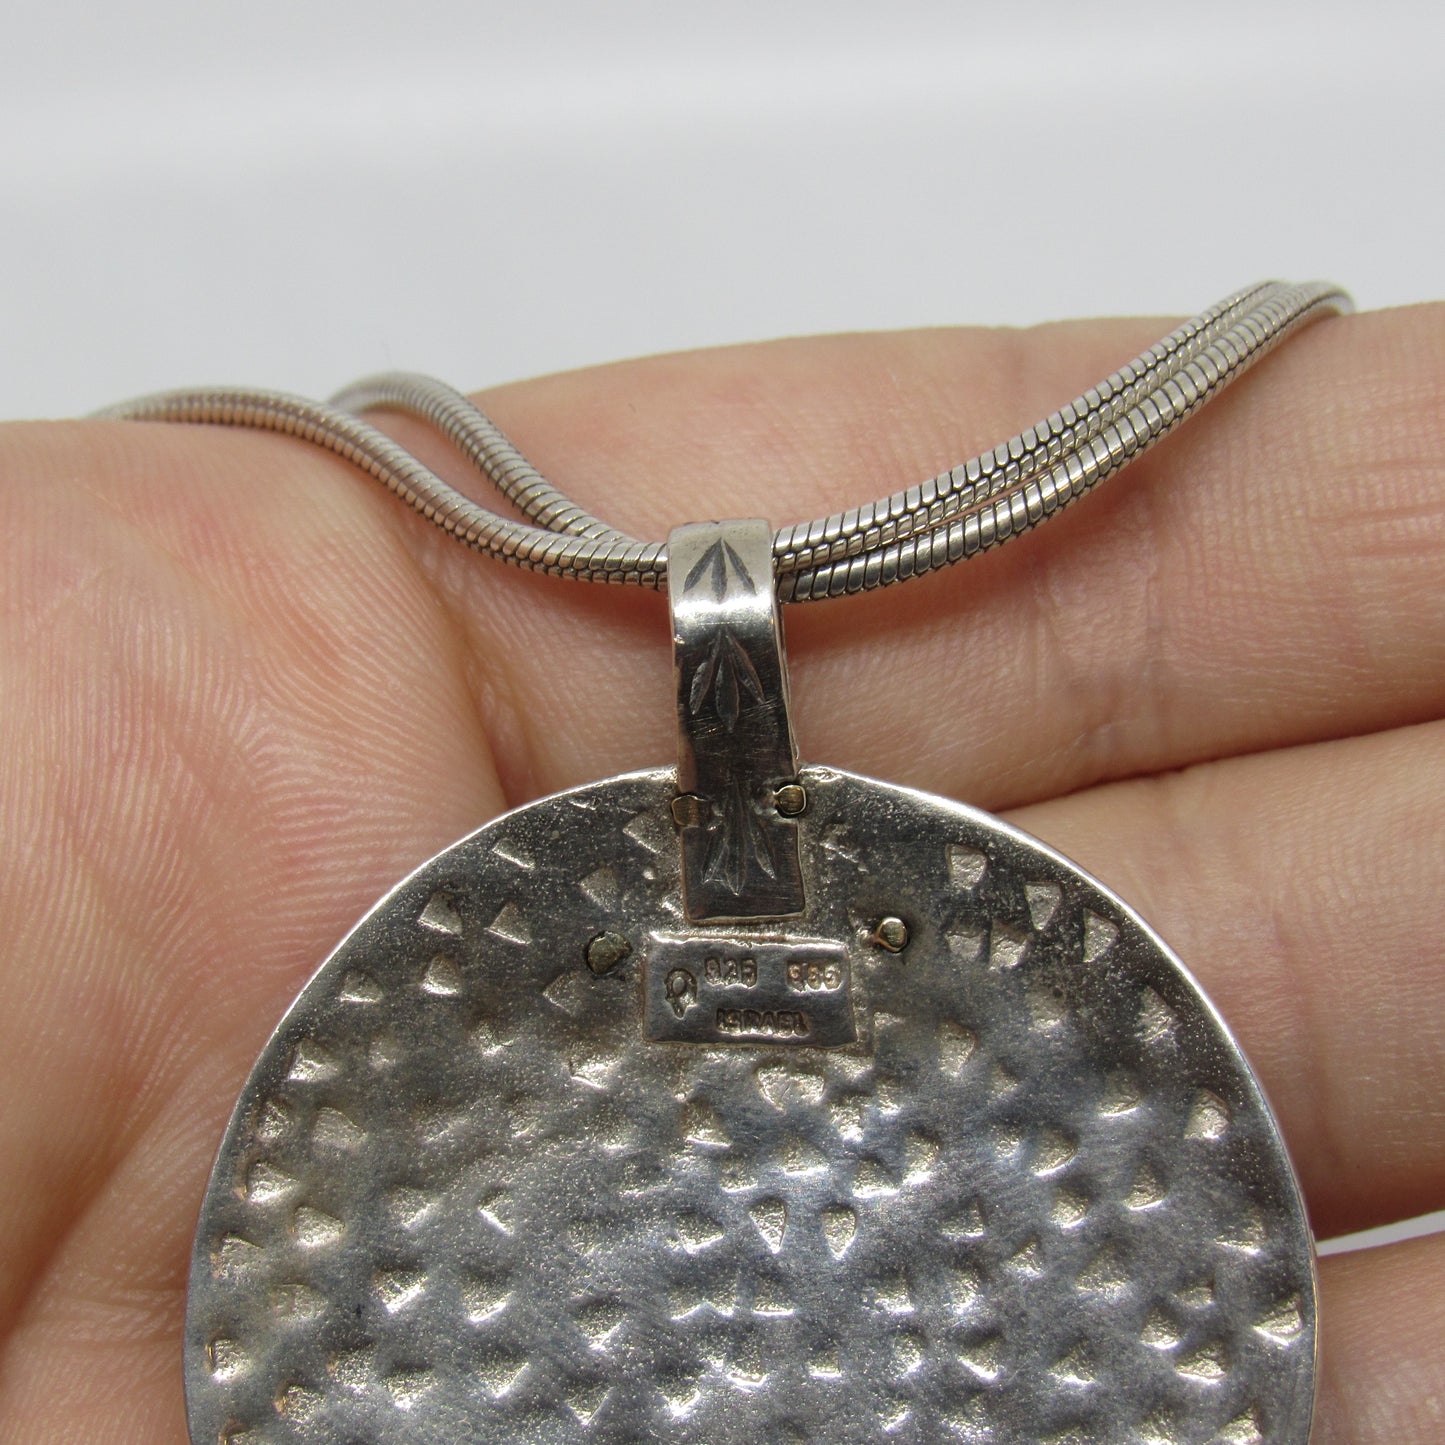 Prodesso Israel 925 Sterling Silver & 585 14k Gold Hammered Pendant & Necklace - 18in